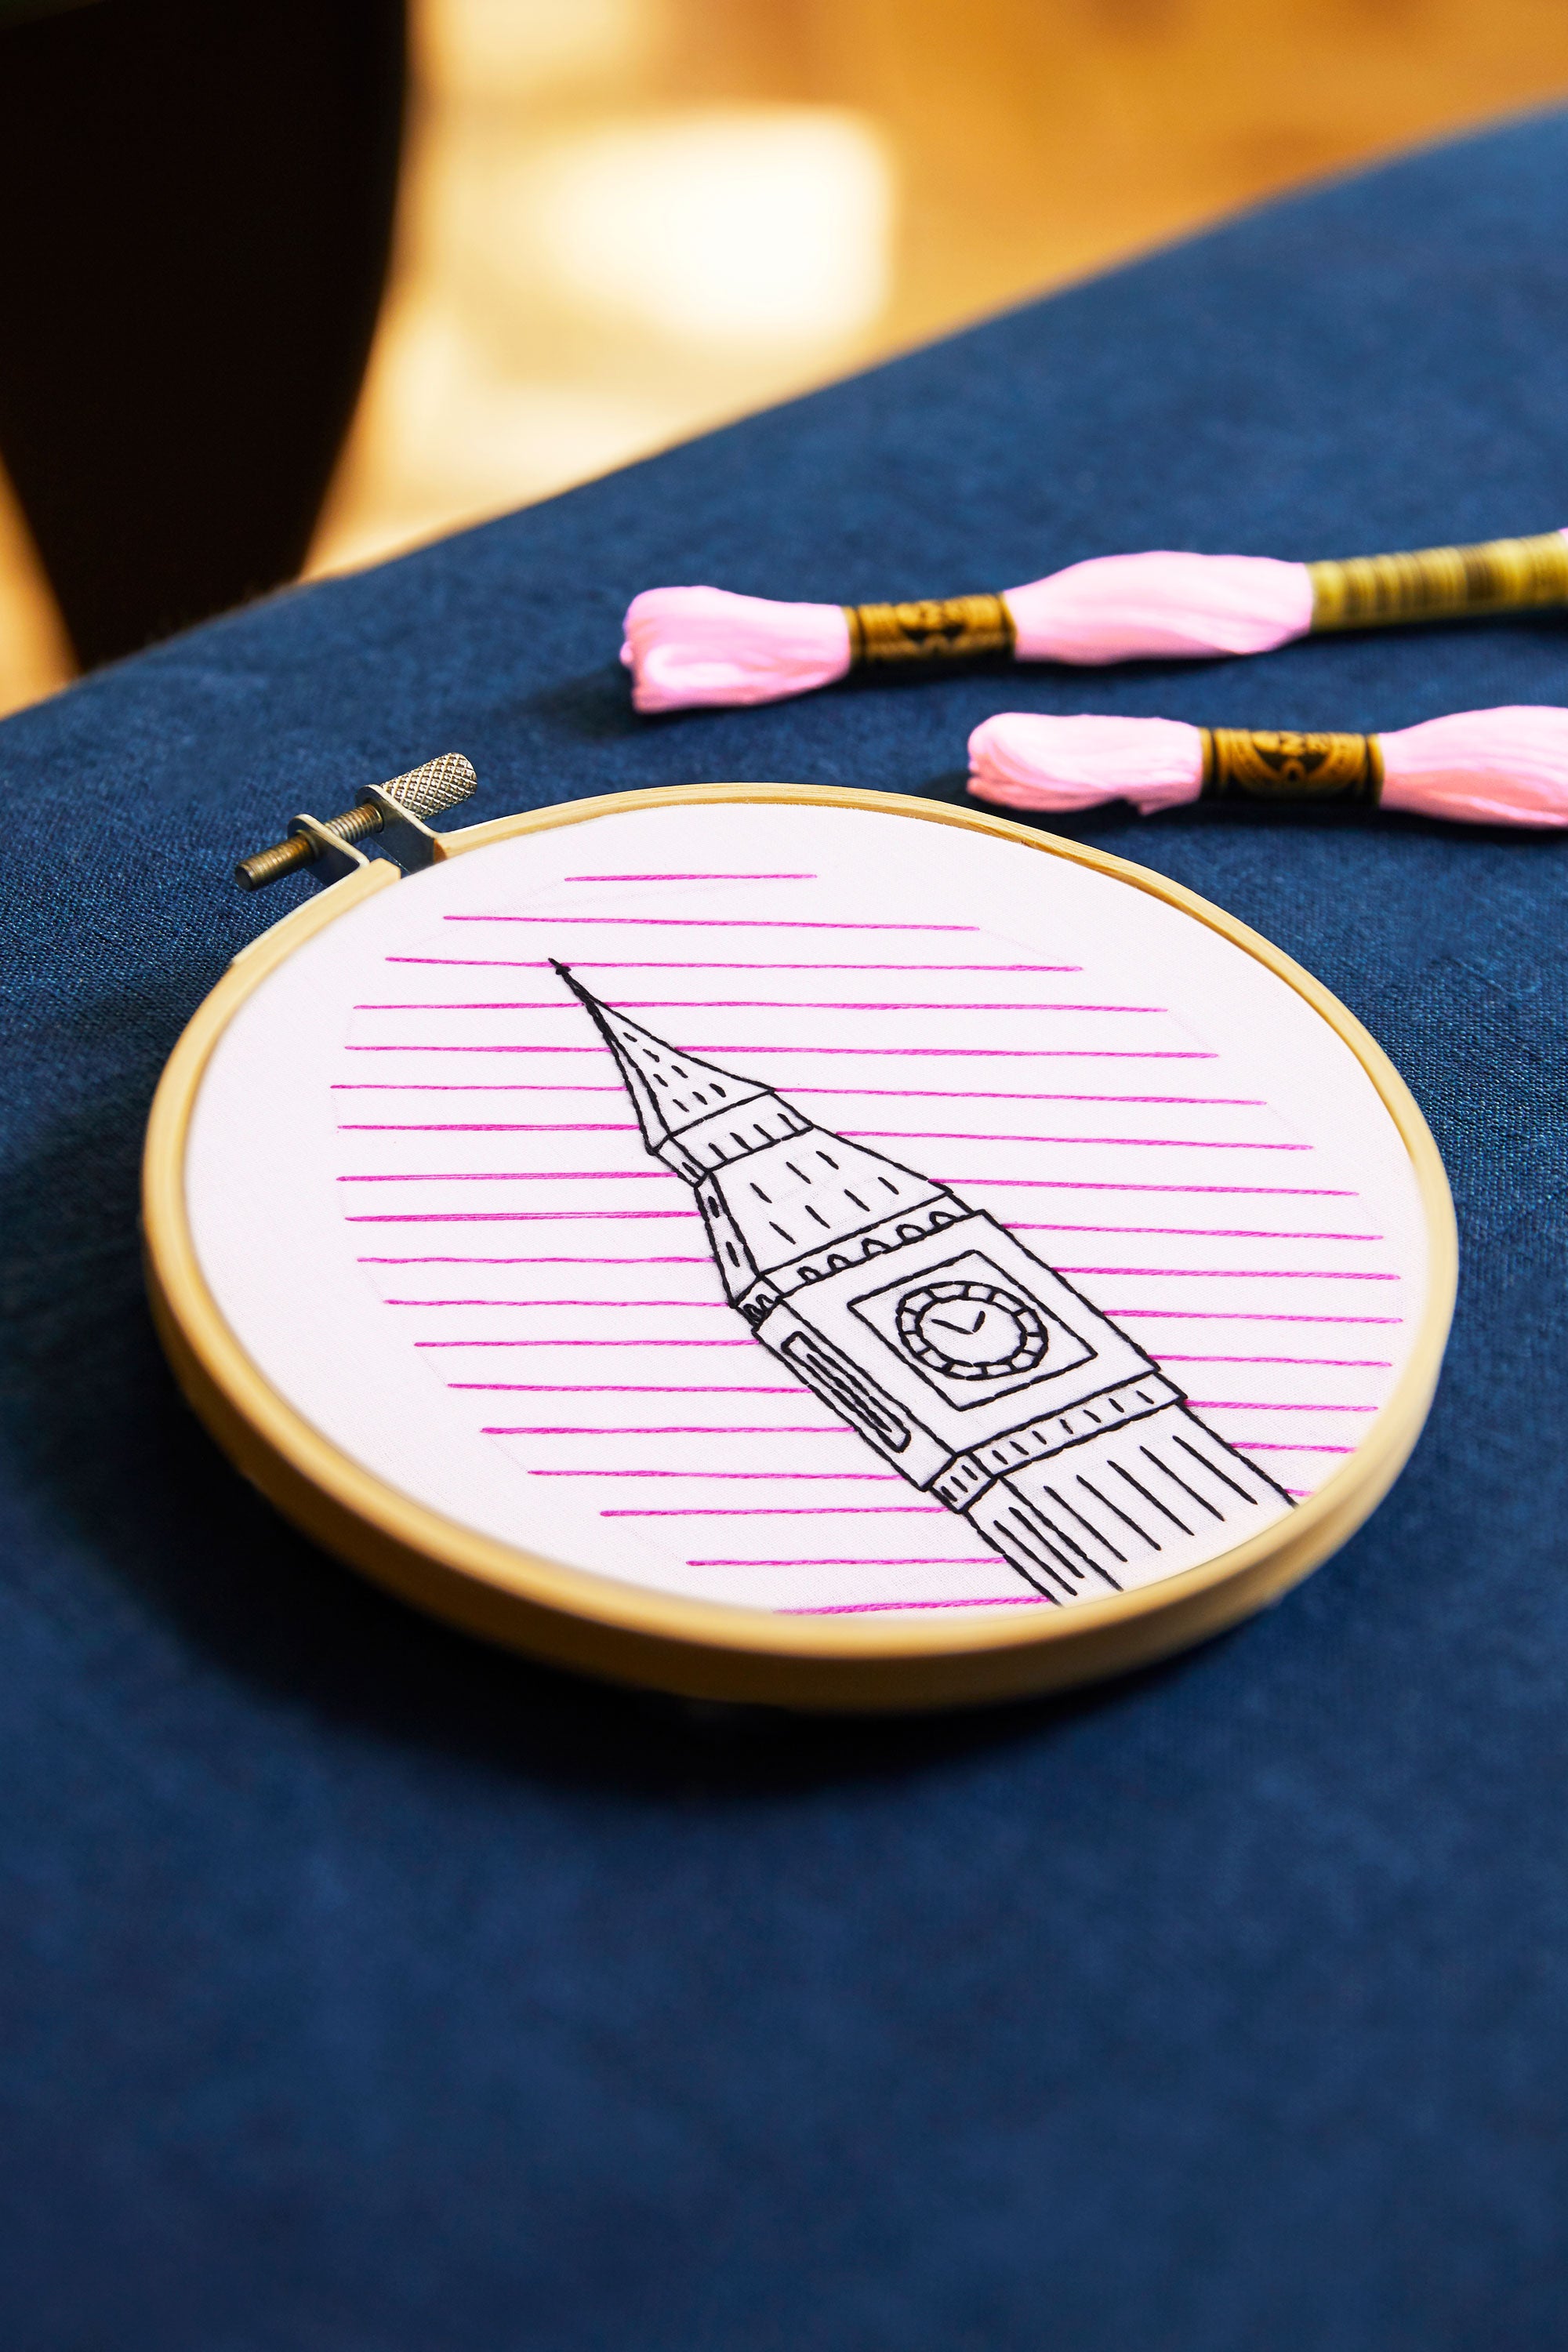 DMC Big Ben by Kseniia Guseva (Embroidery Kit)